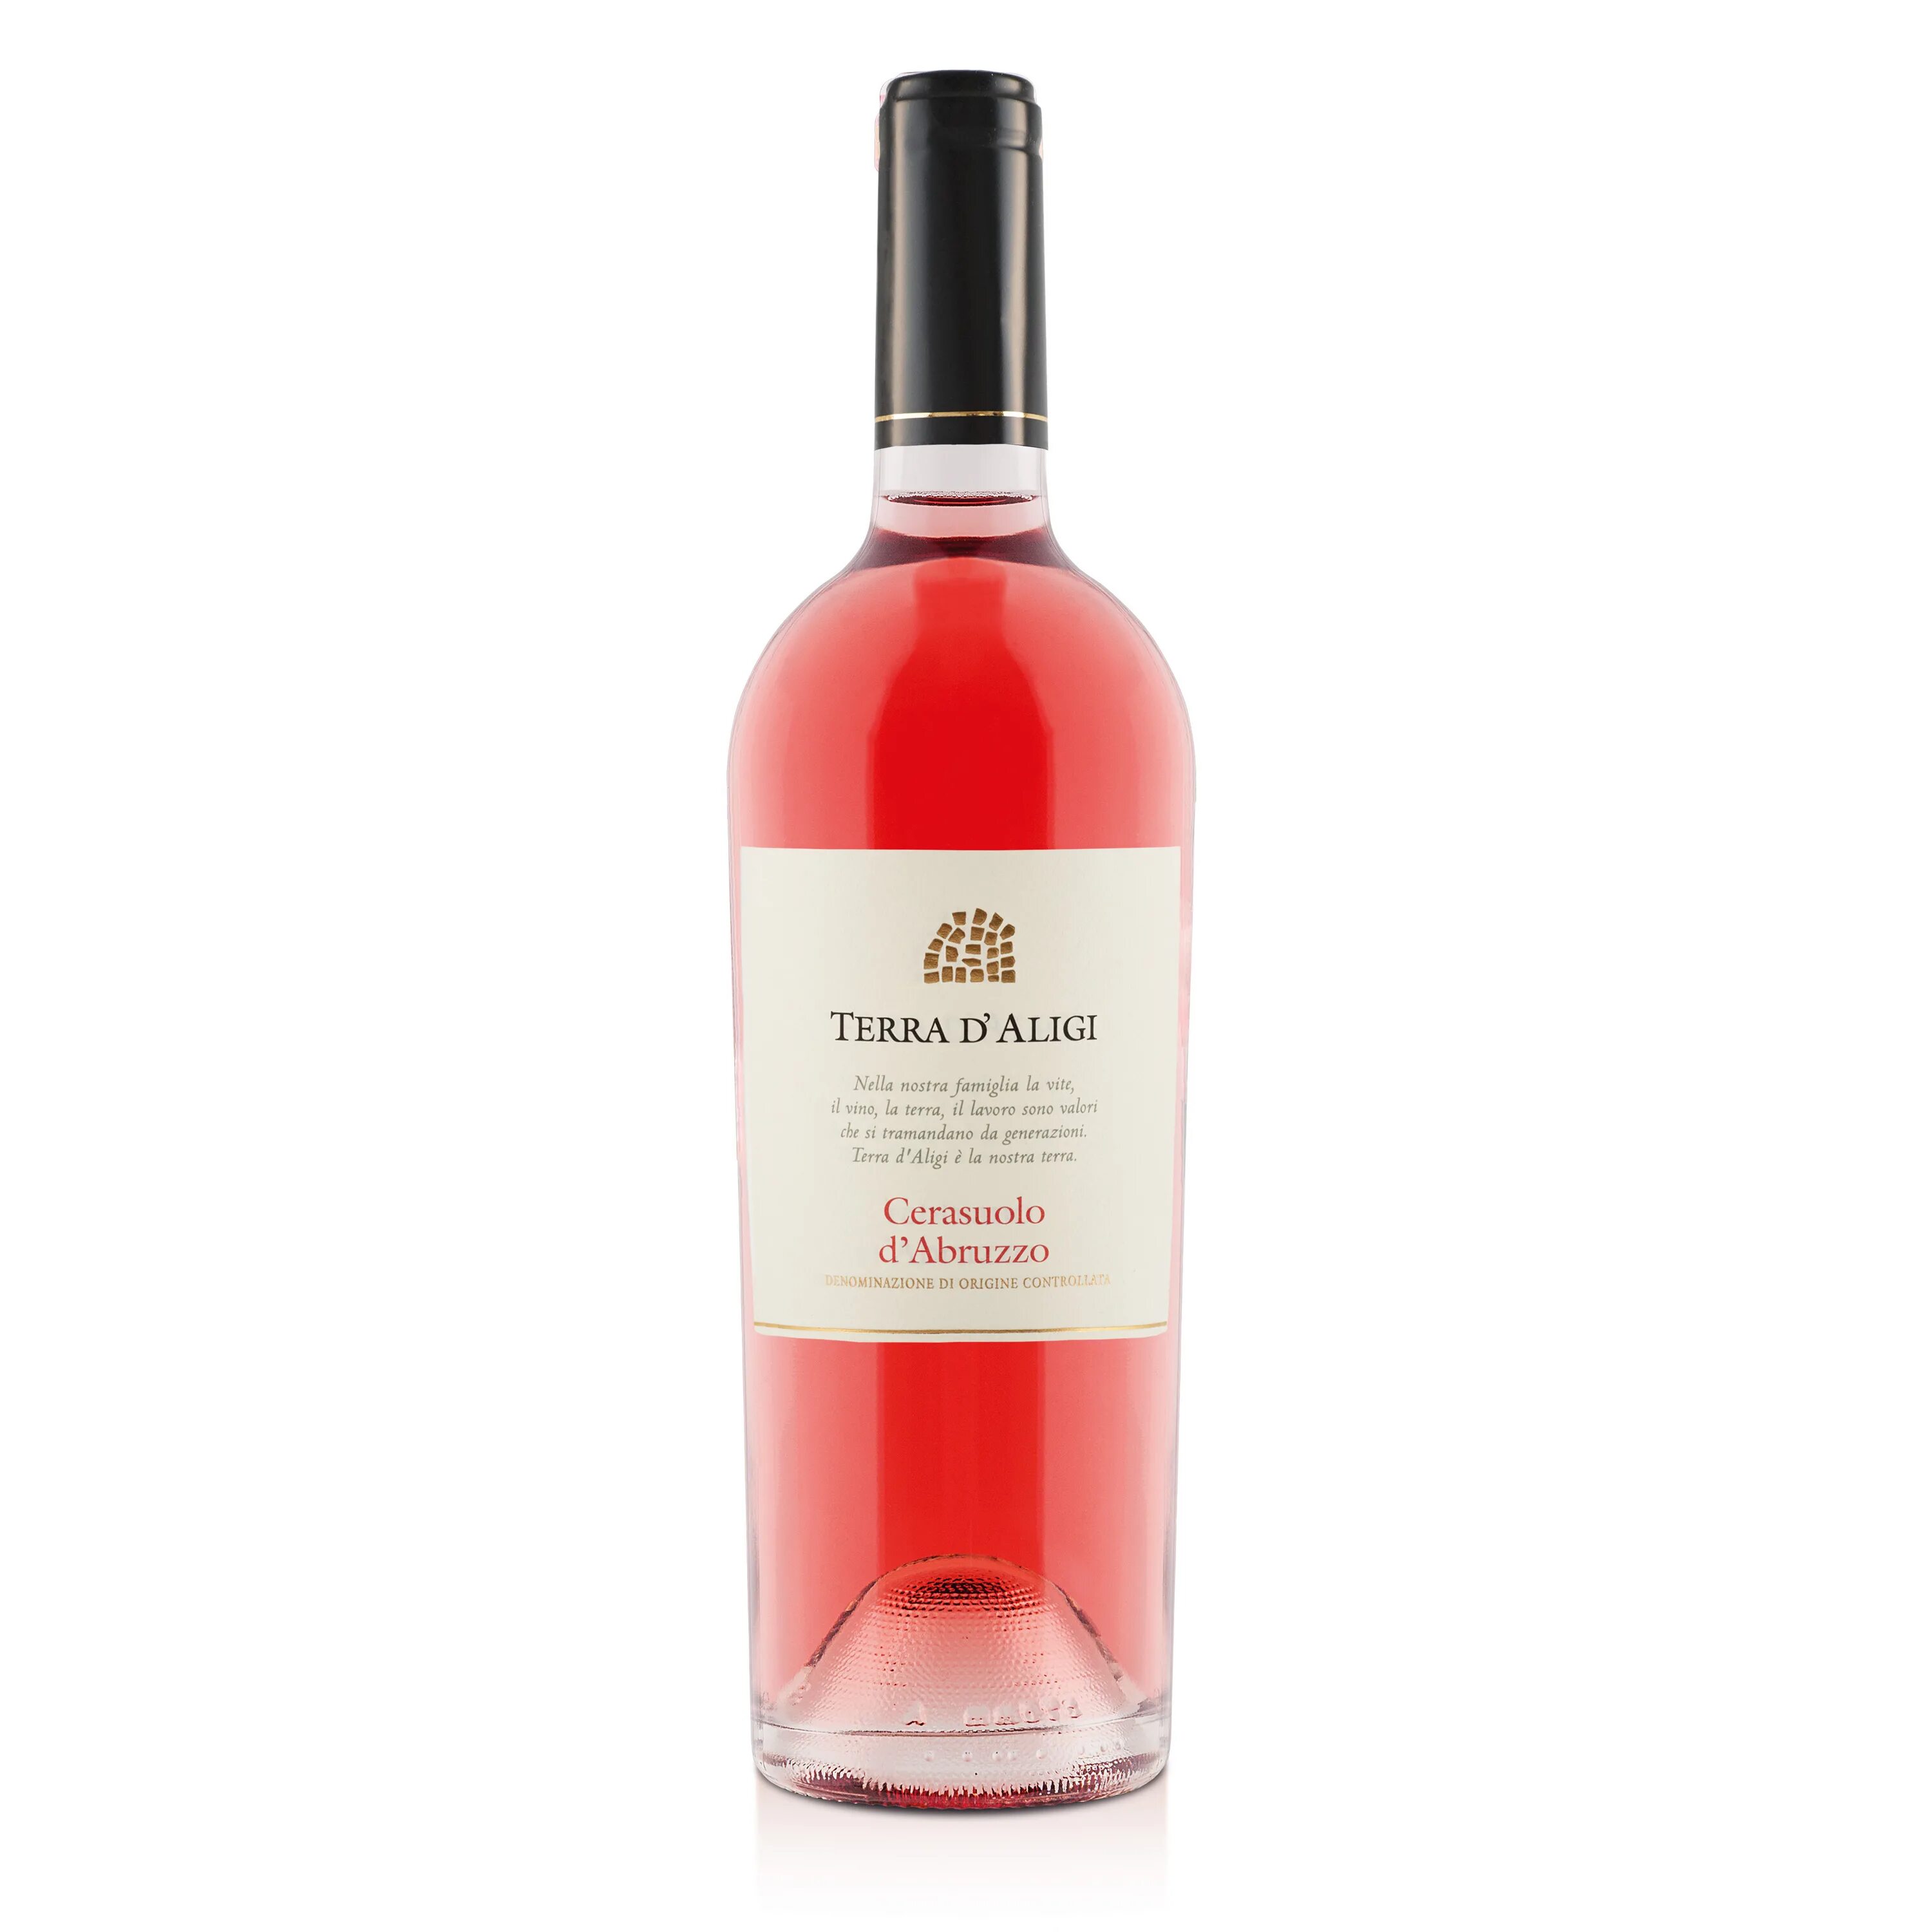 Cerasuolo d'Abruzzo. Вино Cerasuolo. Montecarlo Rose вино Италия. Розовое вино Италия. Розовые вина испании